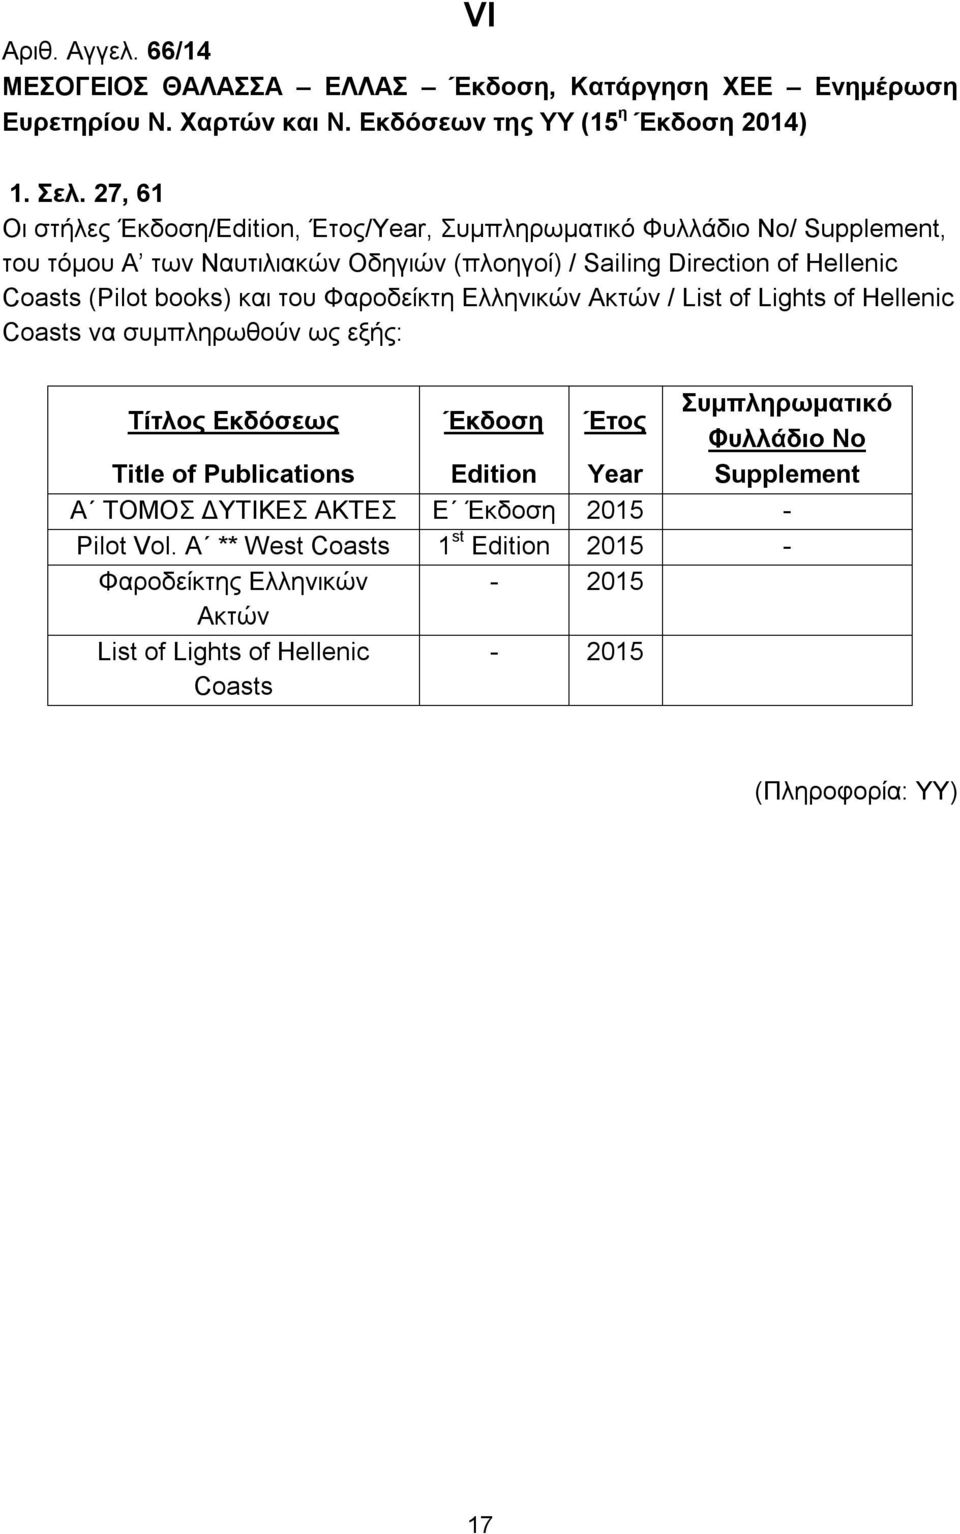 books) και του Φαροδείκτη Ελληνικών Ακτών / List of Lights of Hellenic Coasts να συμπληρωθούν ως εξής: Τίτλος Εκδόσεως Έκδοση Έτος Συμπληρωματικό Φυλλάδιο Νο Title of